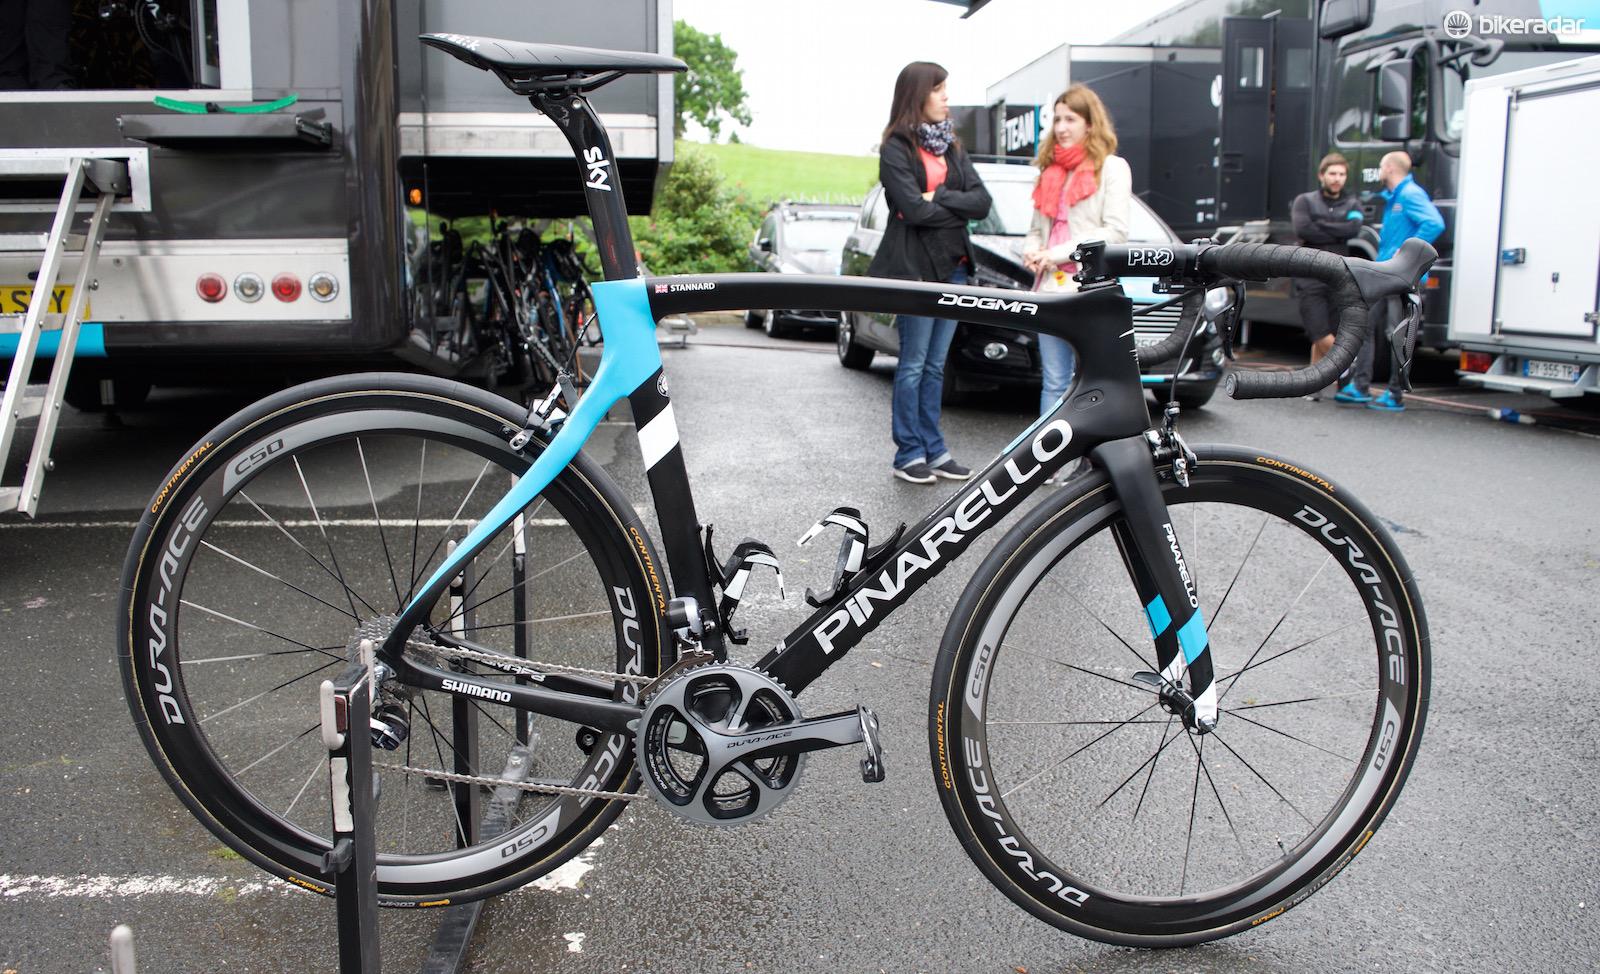 Ian Stannard's Pinarello Dogma F8 for the Tour de France - BikeRadar